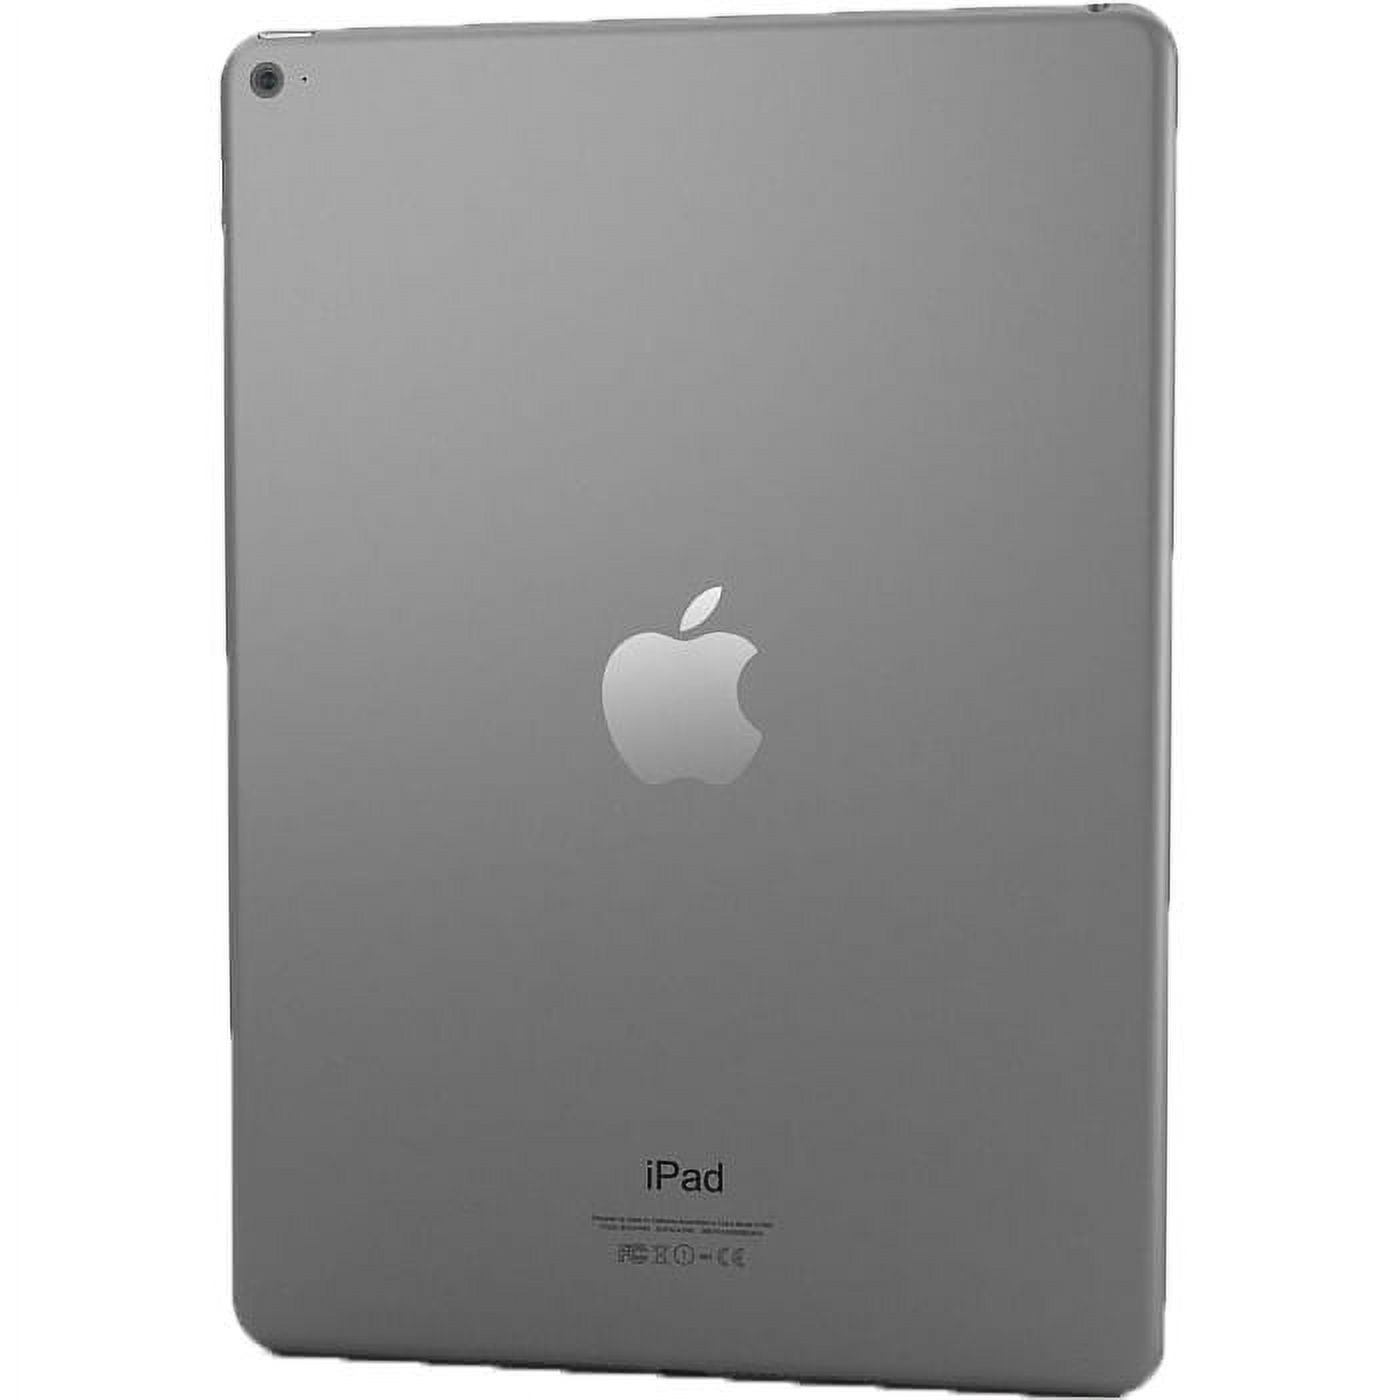 Restored Apple iPad Air 2 16GB WiFi 2GB iOS 10 9.7" Tablet - Space Gray (Refurbished) - image 4 of 4